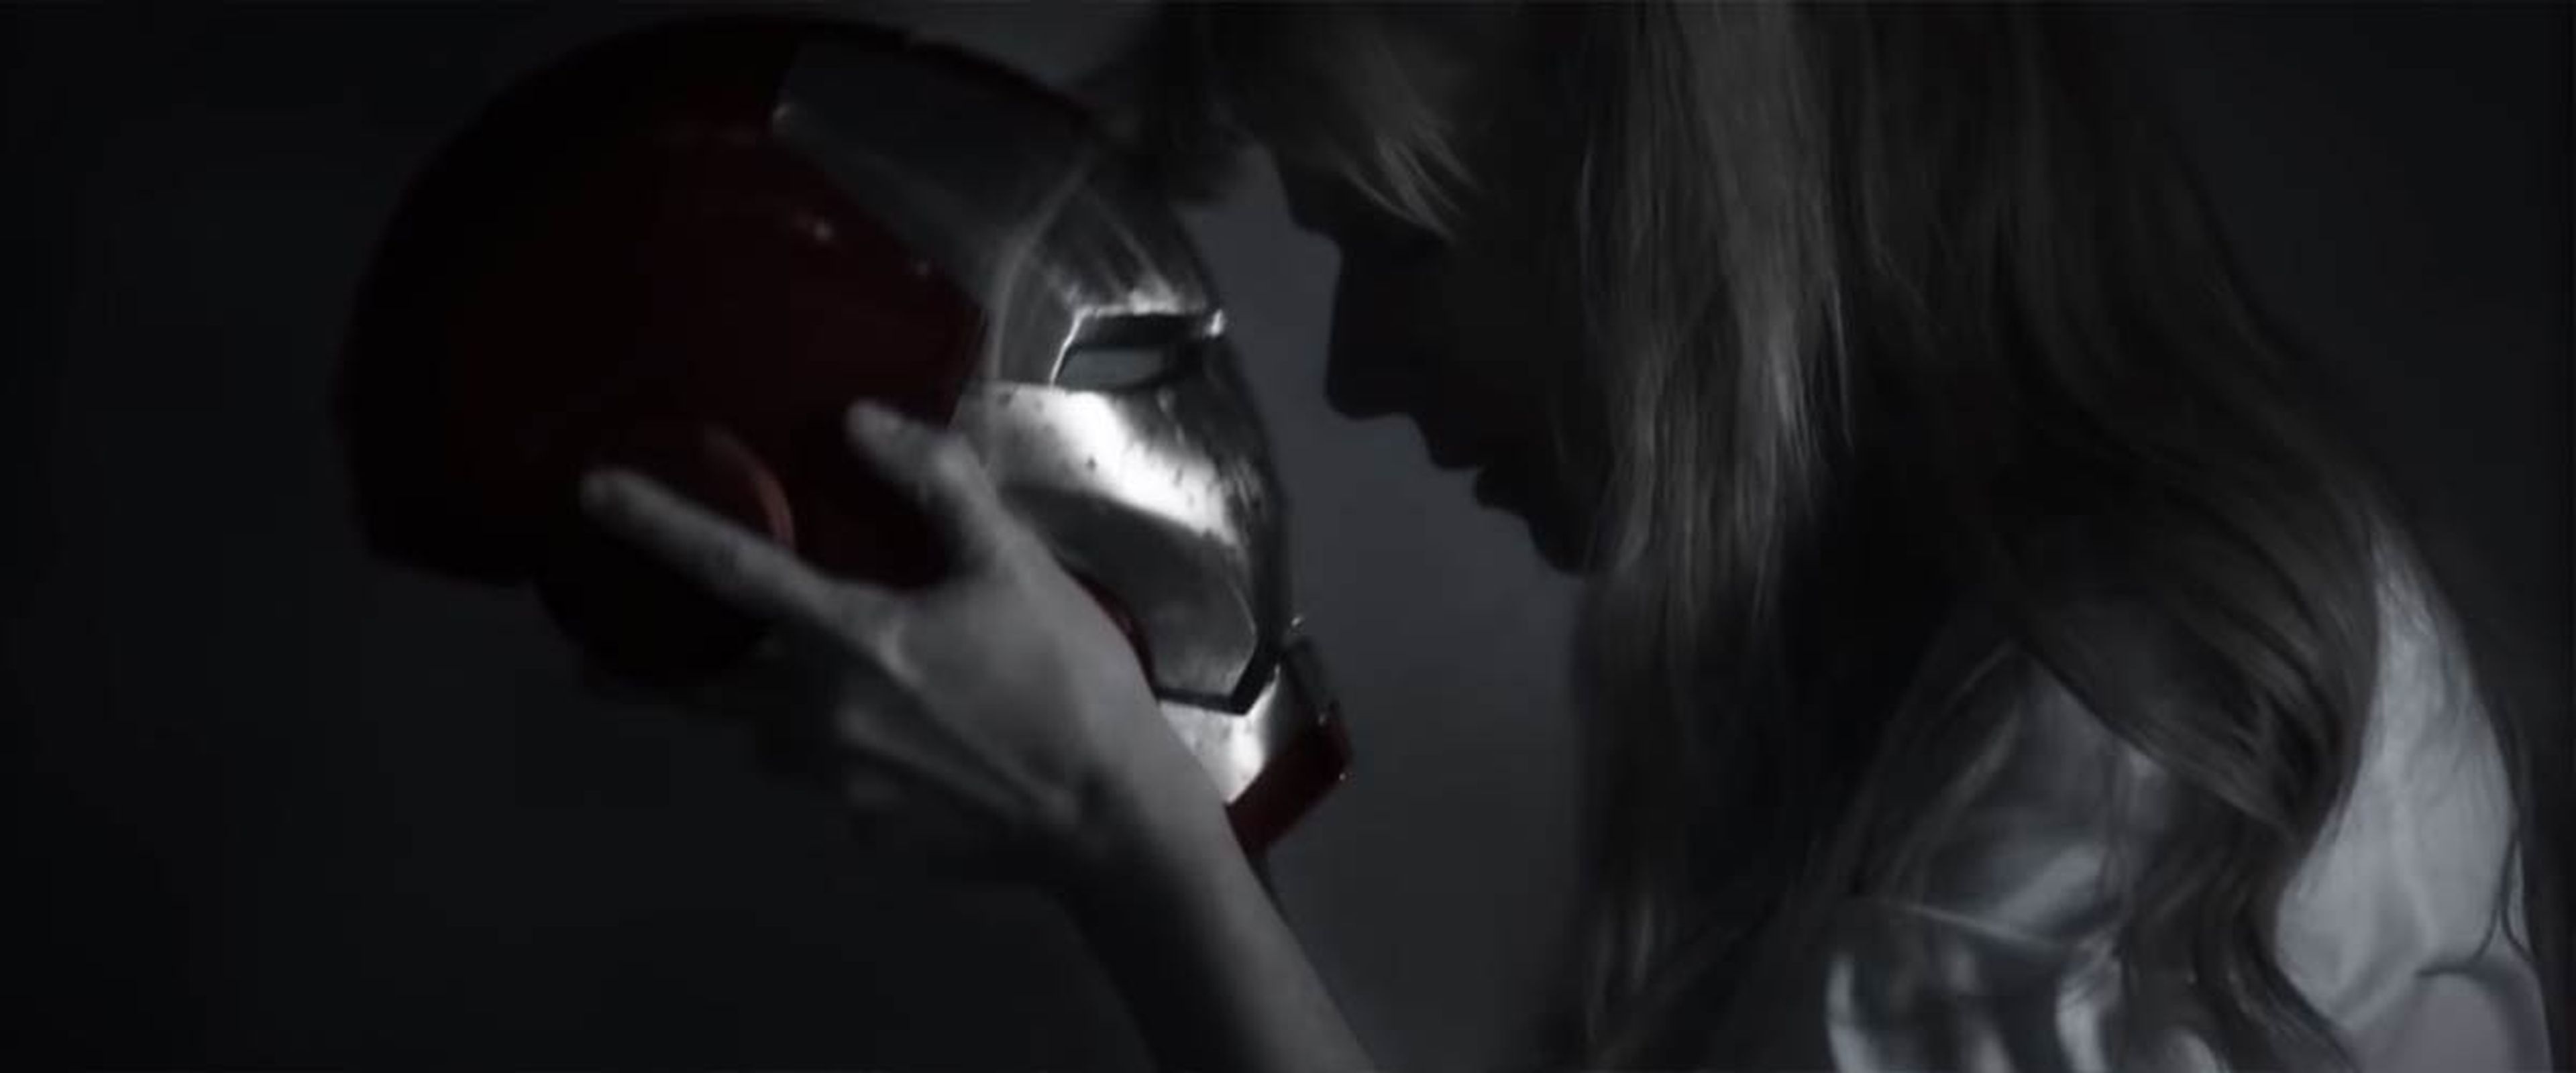 Pepper Potts (Gwyneth Paltrow) en Trailer final de Vengadores Endgame